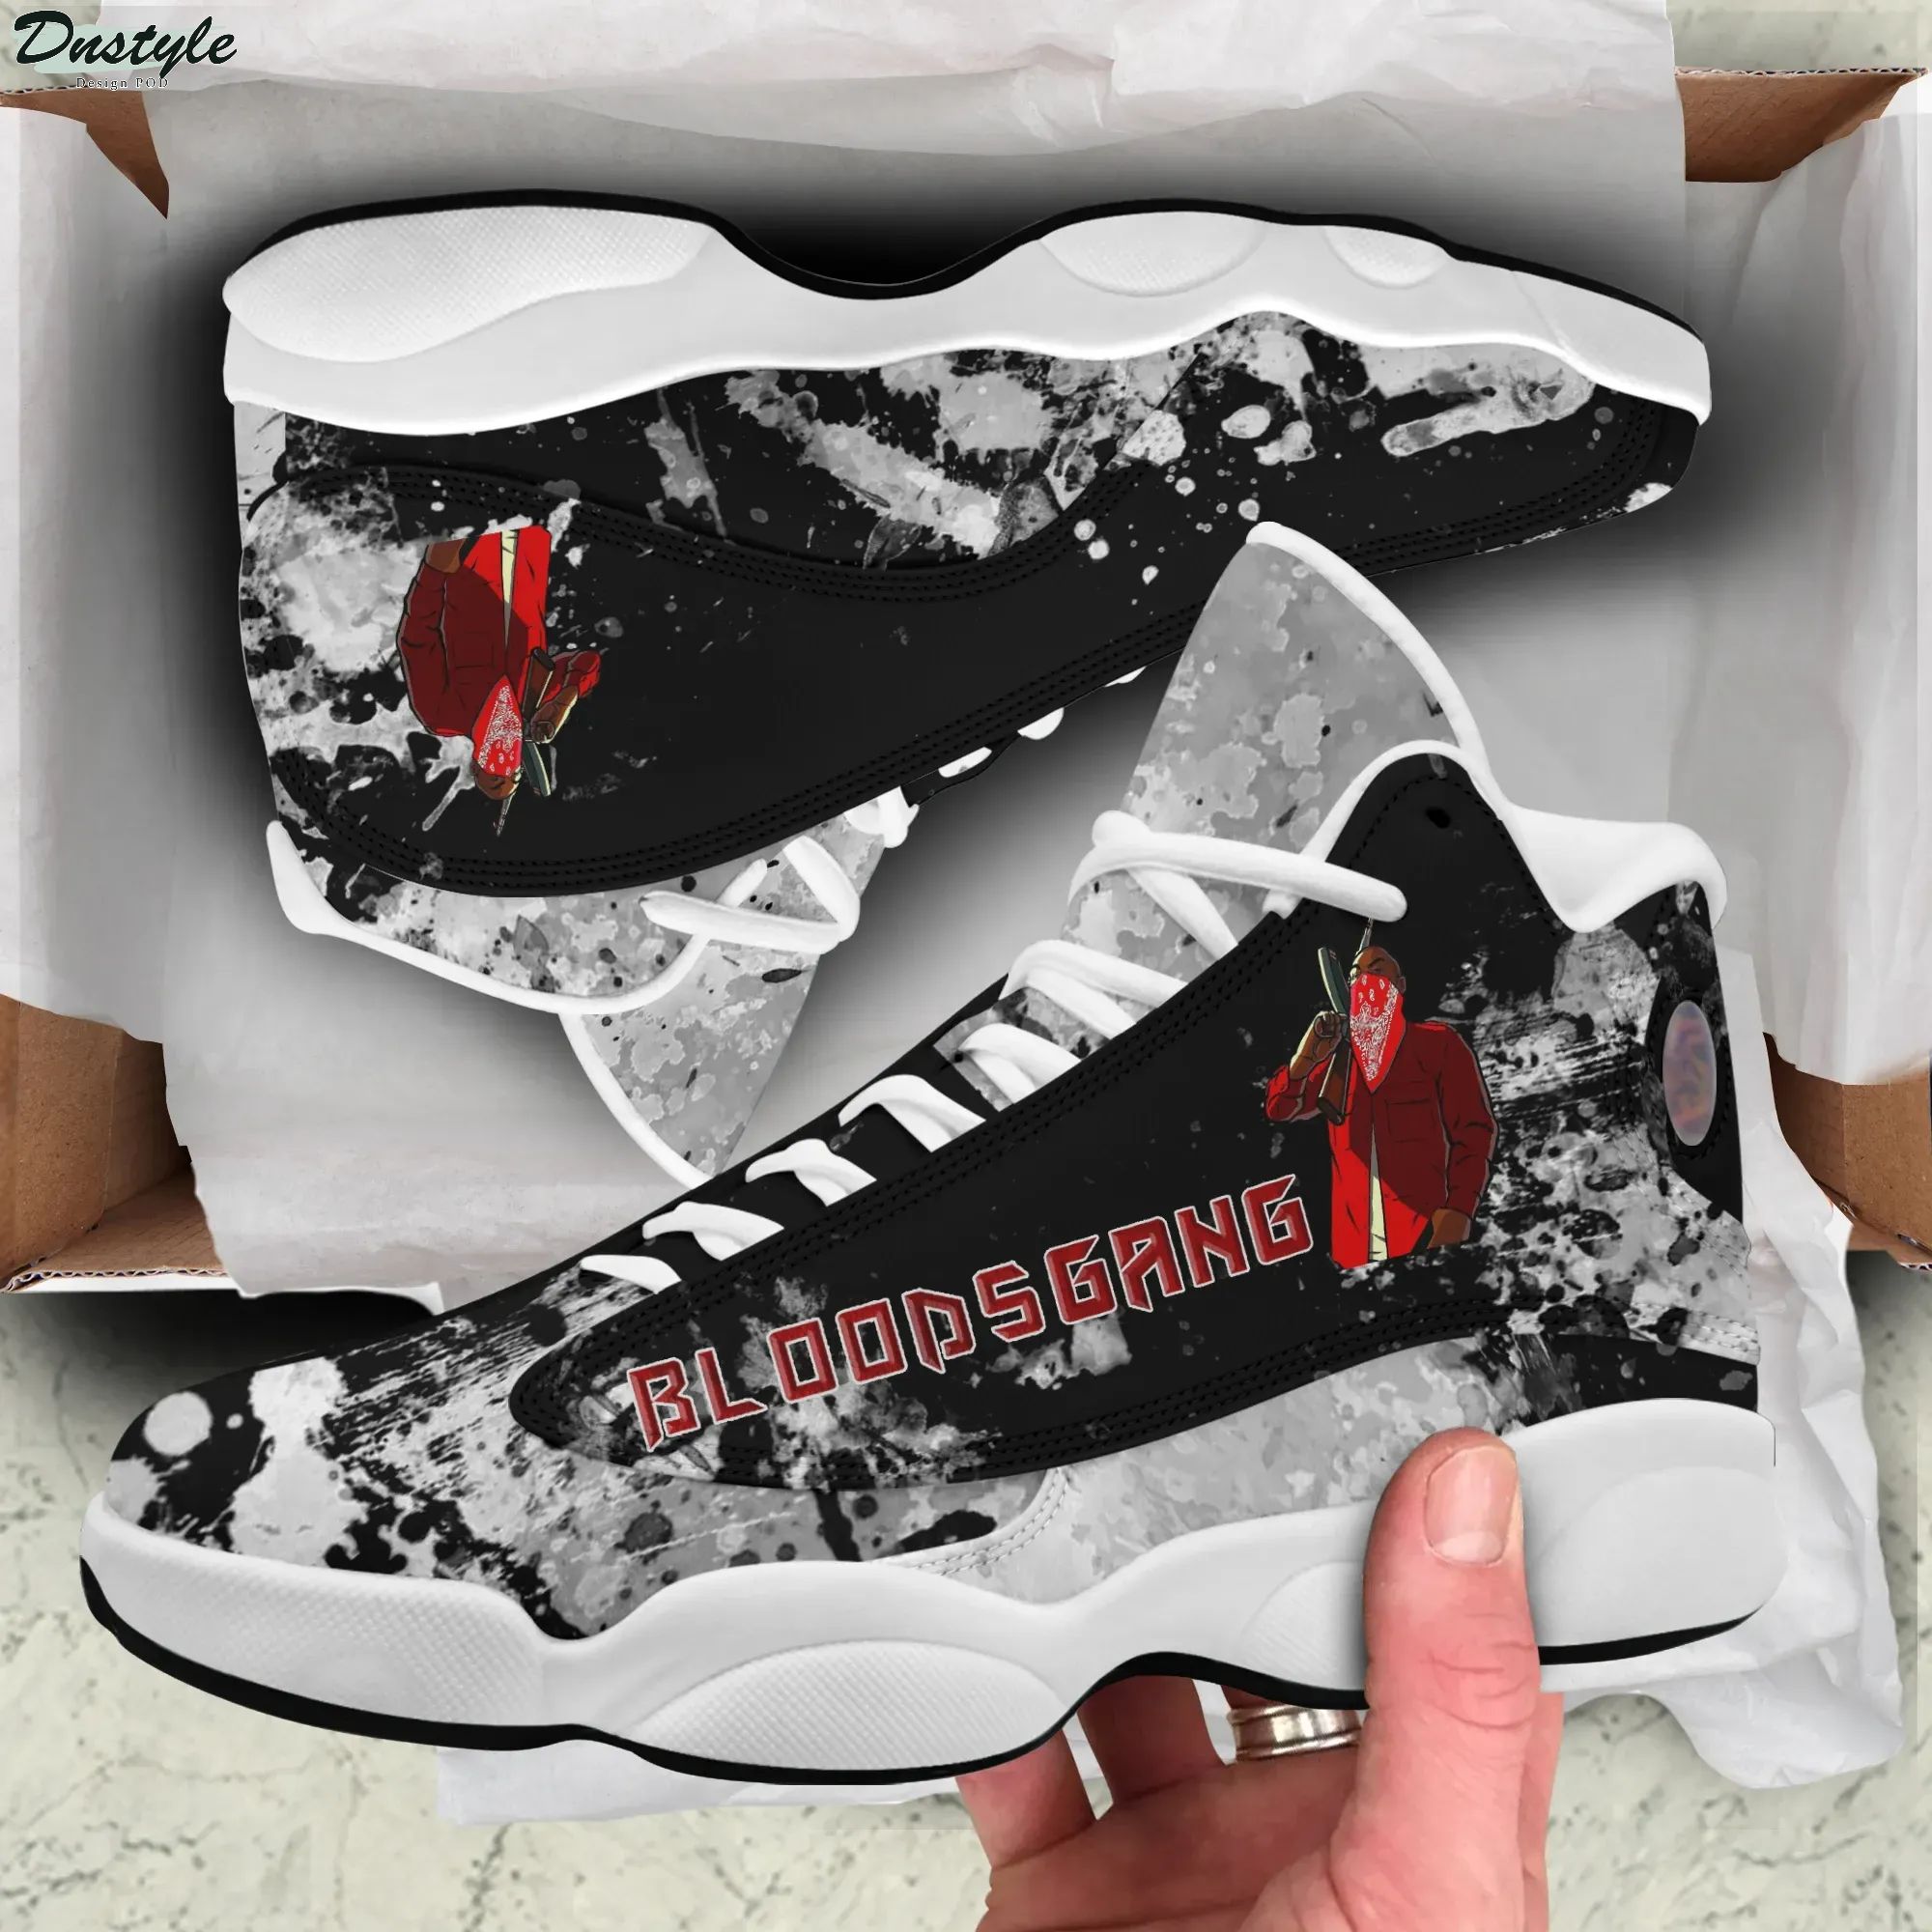 Bloods Gang Air Jordan 13 Sneakers